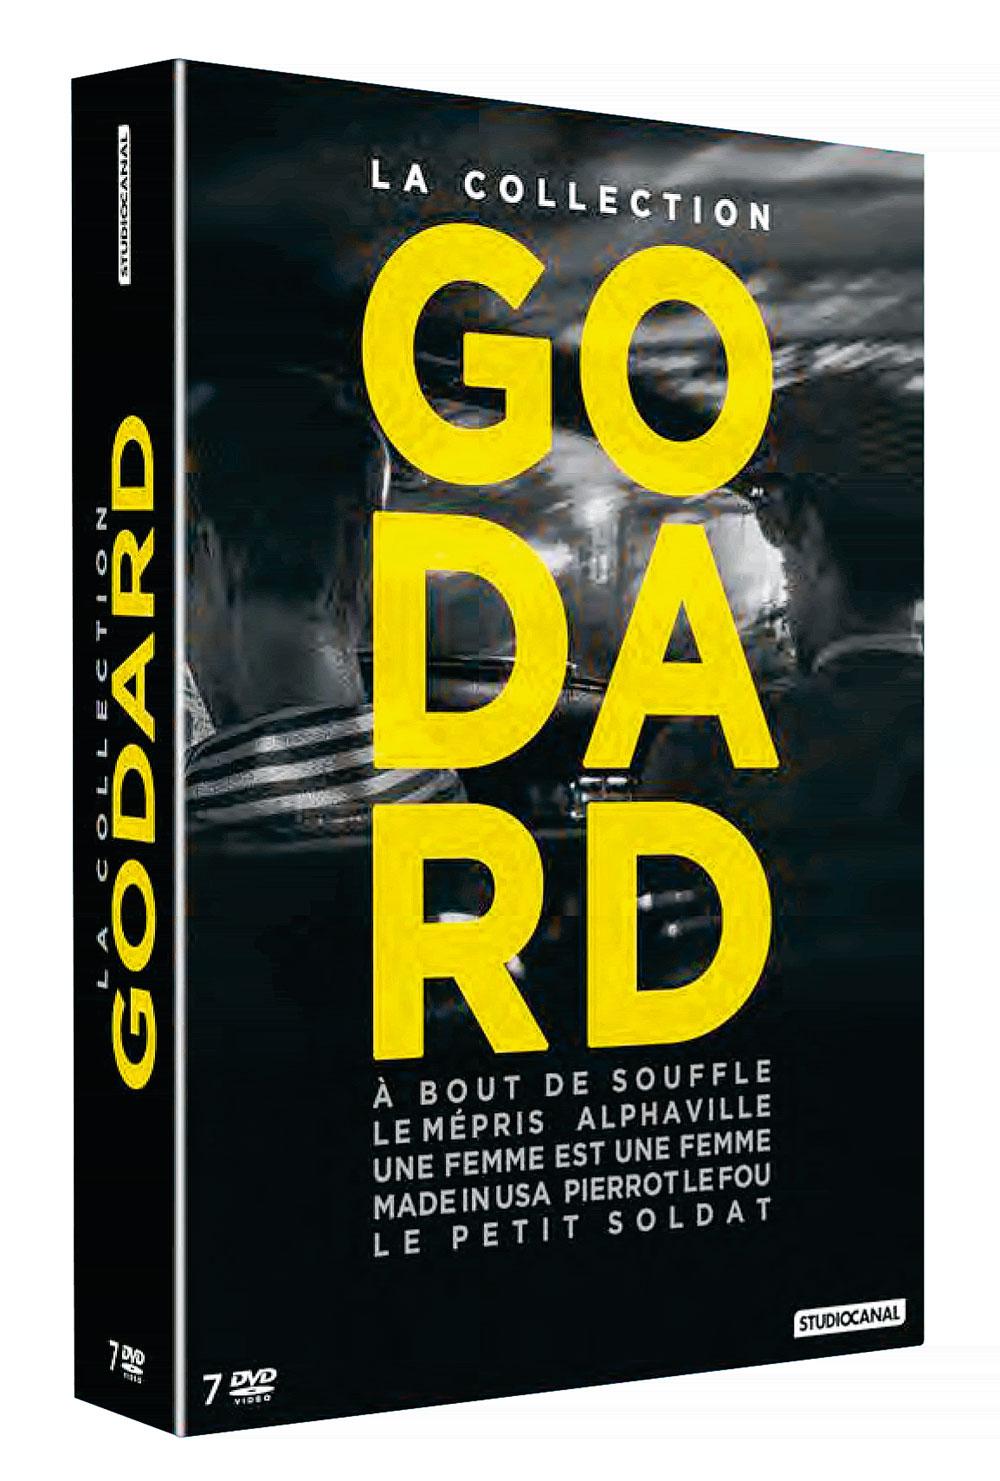 La collection Godard 